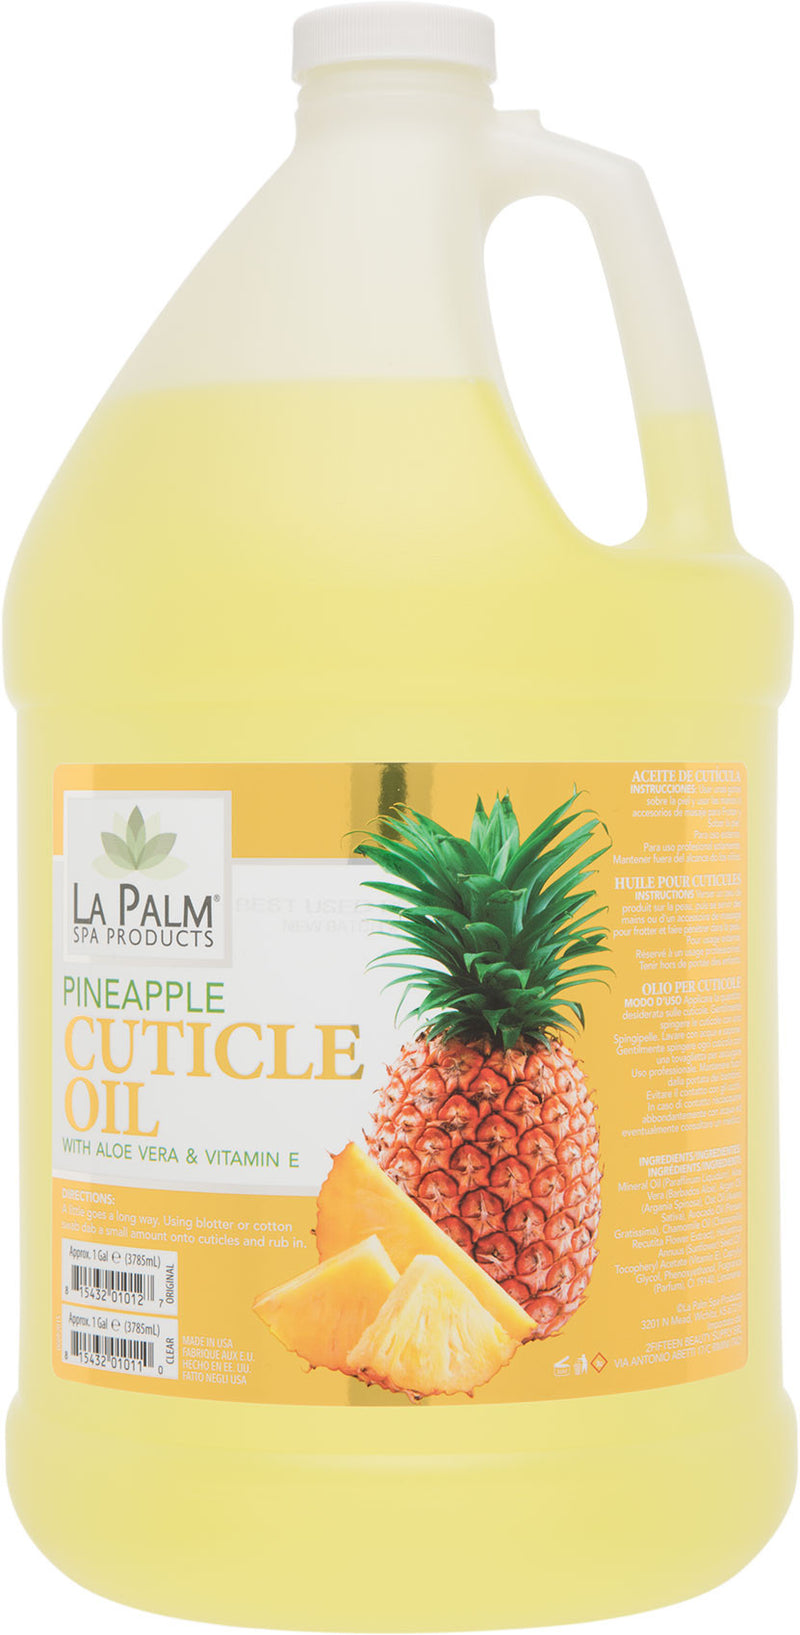 La Palm - Pineapple Cuticle Oil